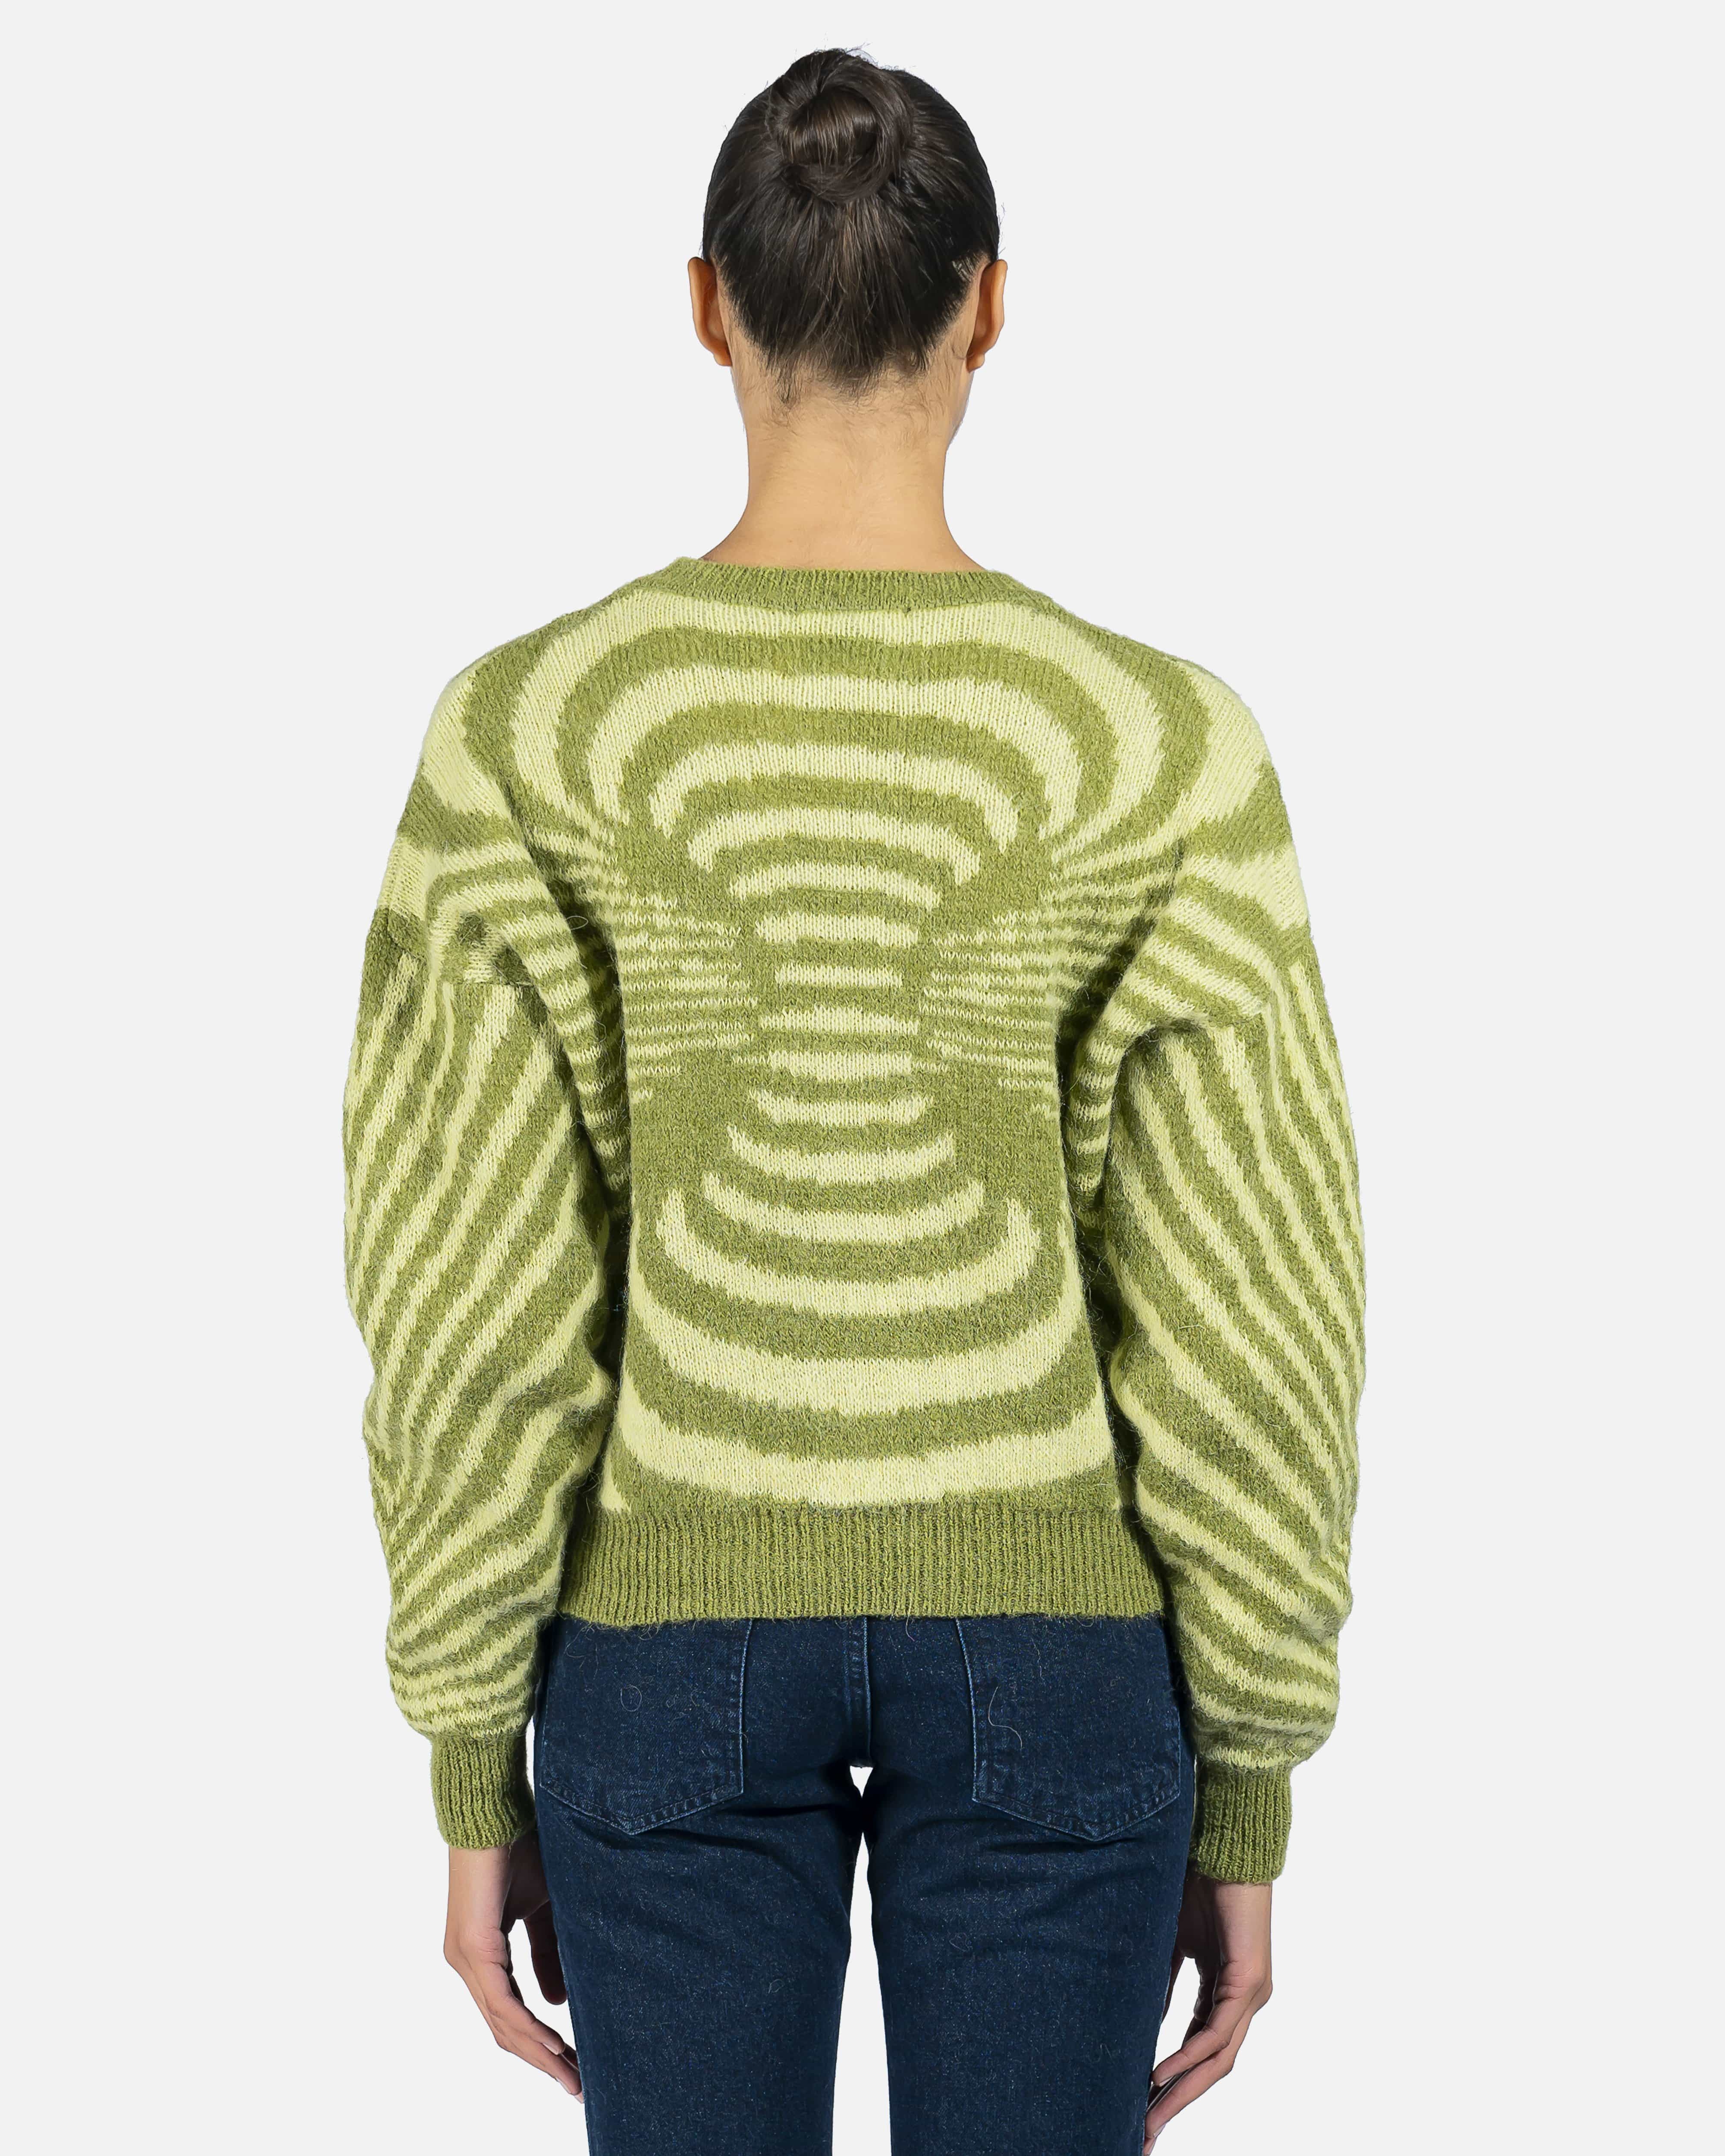 Matrix Sweater in Medium Green